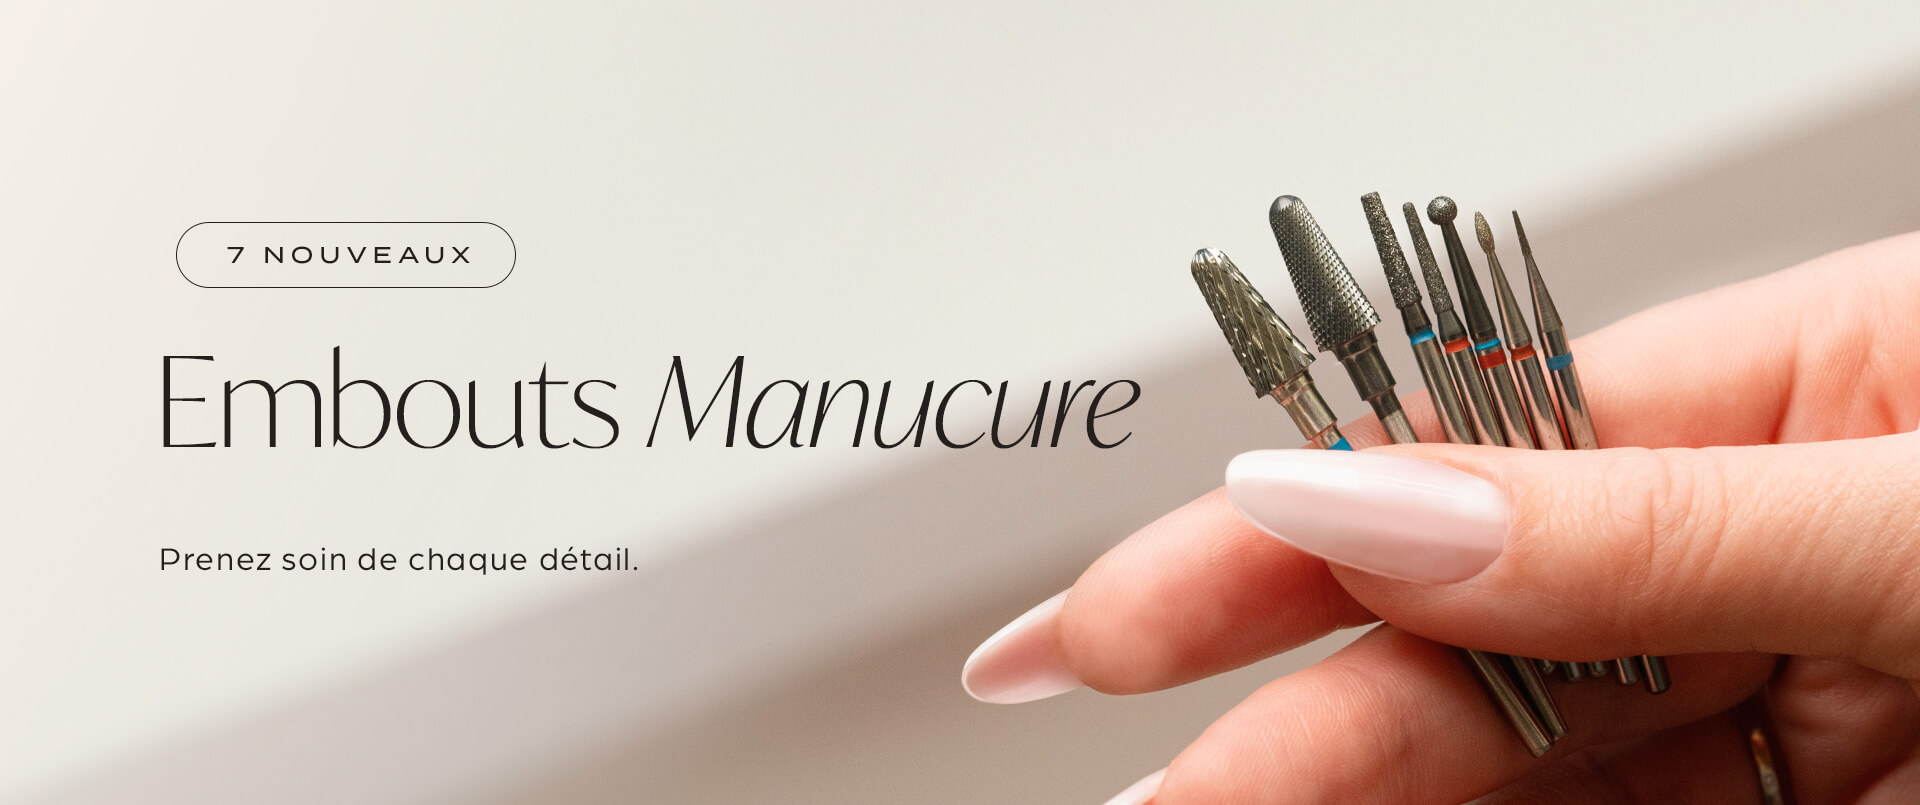 Embouts Manucure - Indigo Nails France